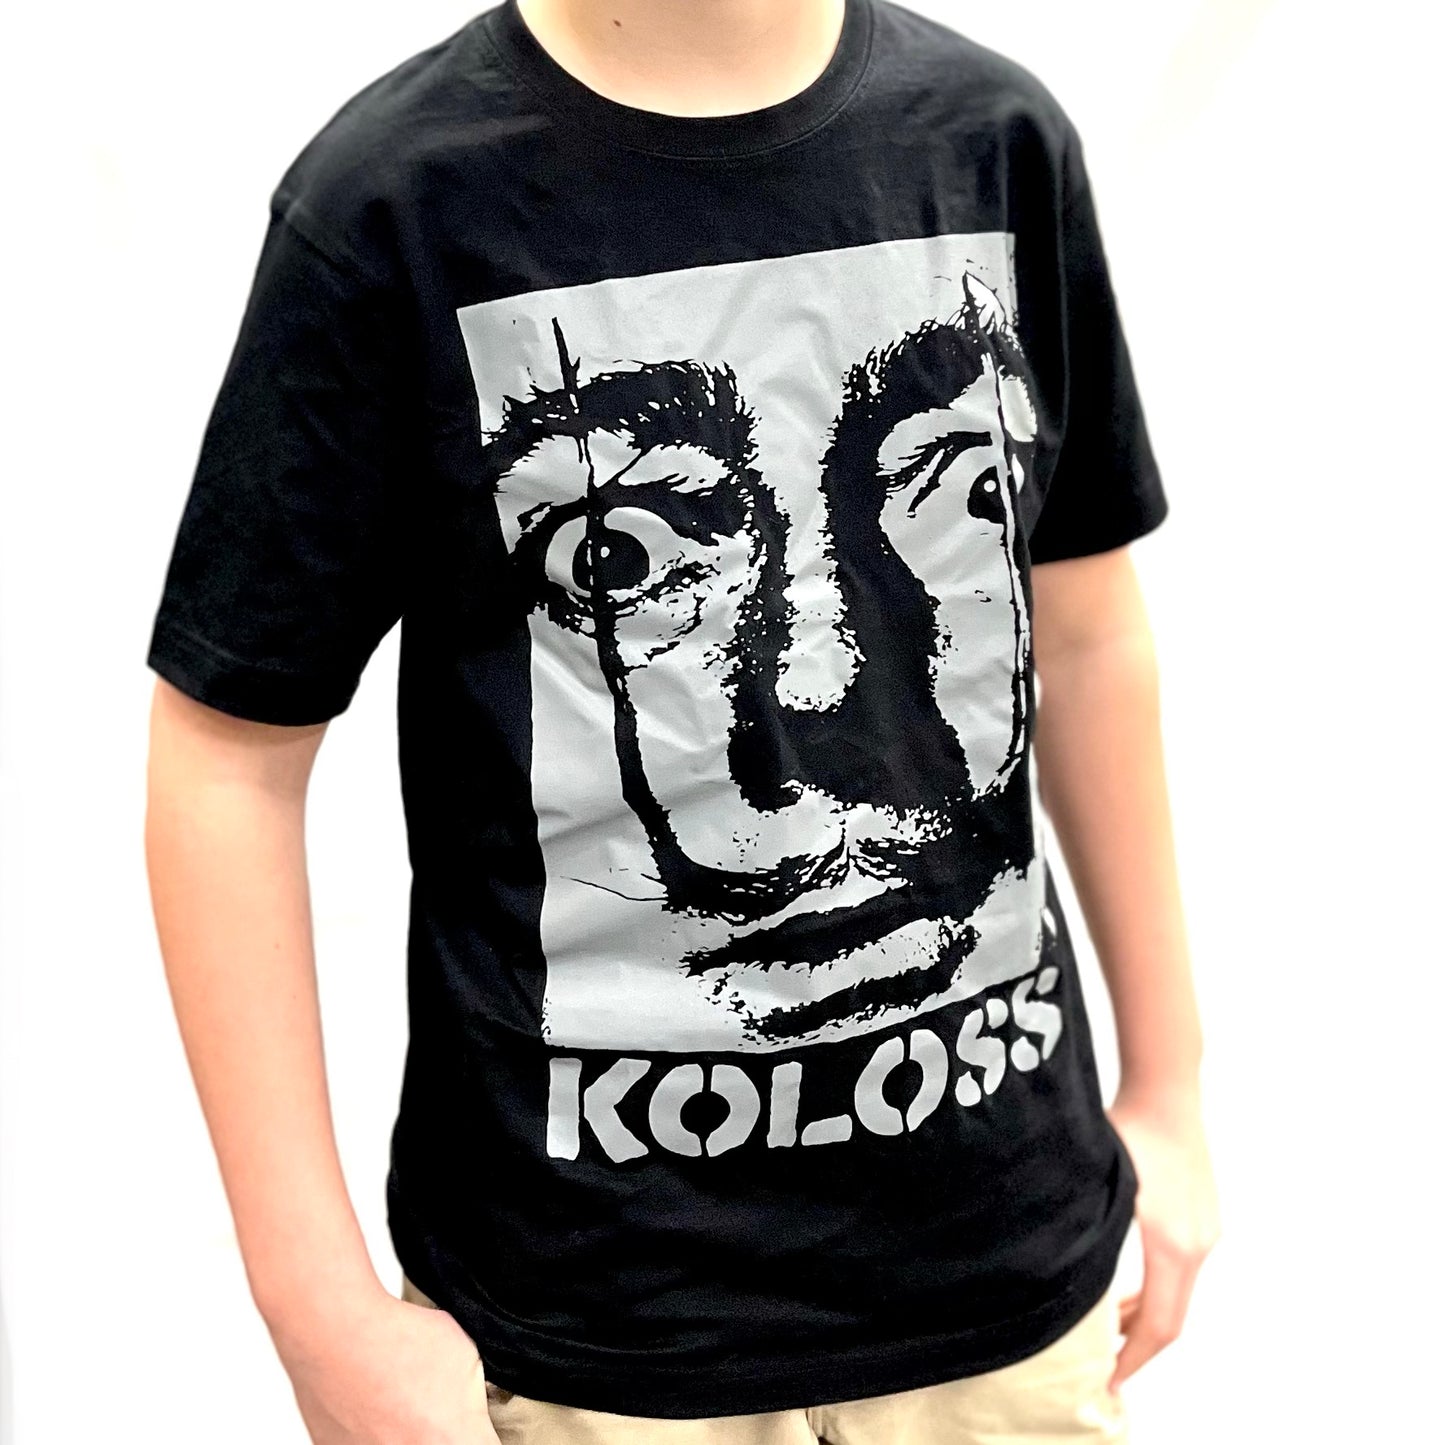 Koloss - Skateboard & Clothing